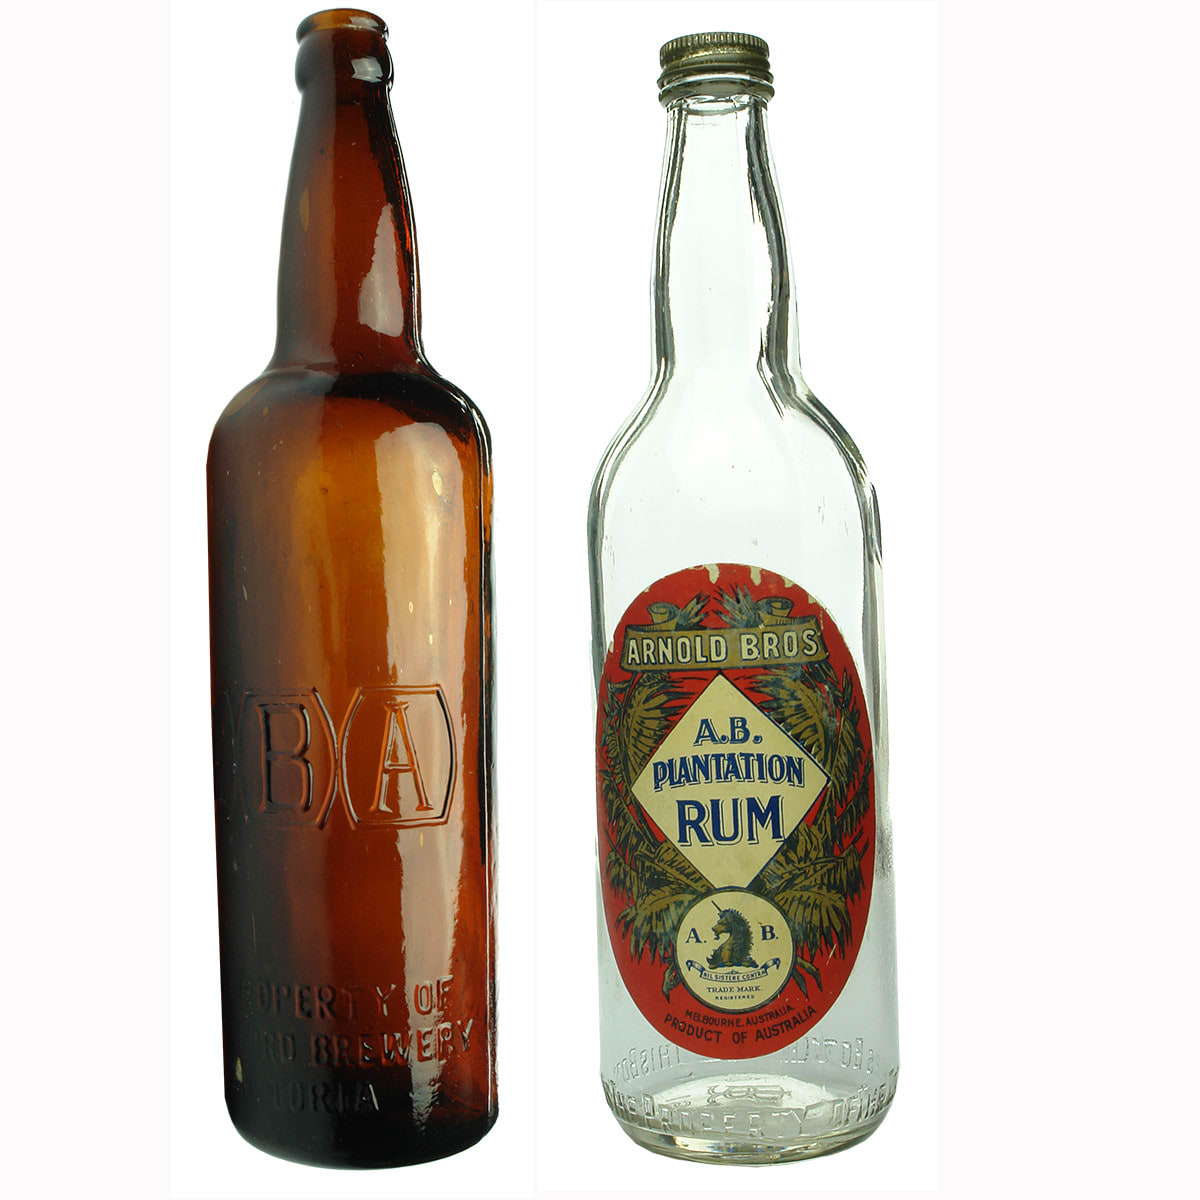 Pair of Melbourne Bottles: ABA Beer; Labelled Arnold Bros. Plantation Rum.